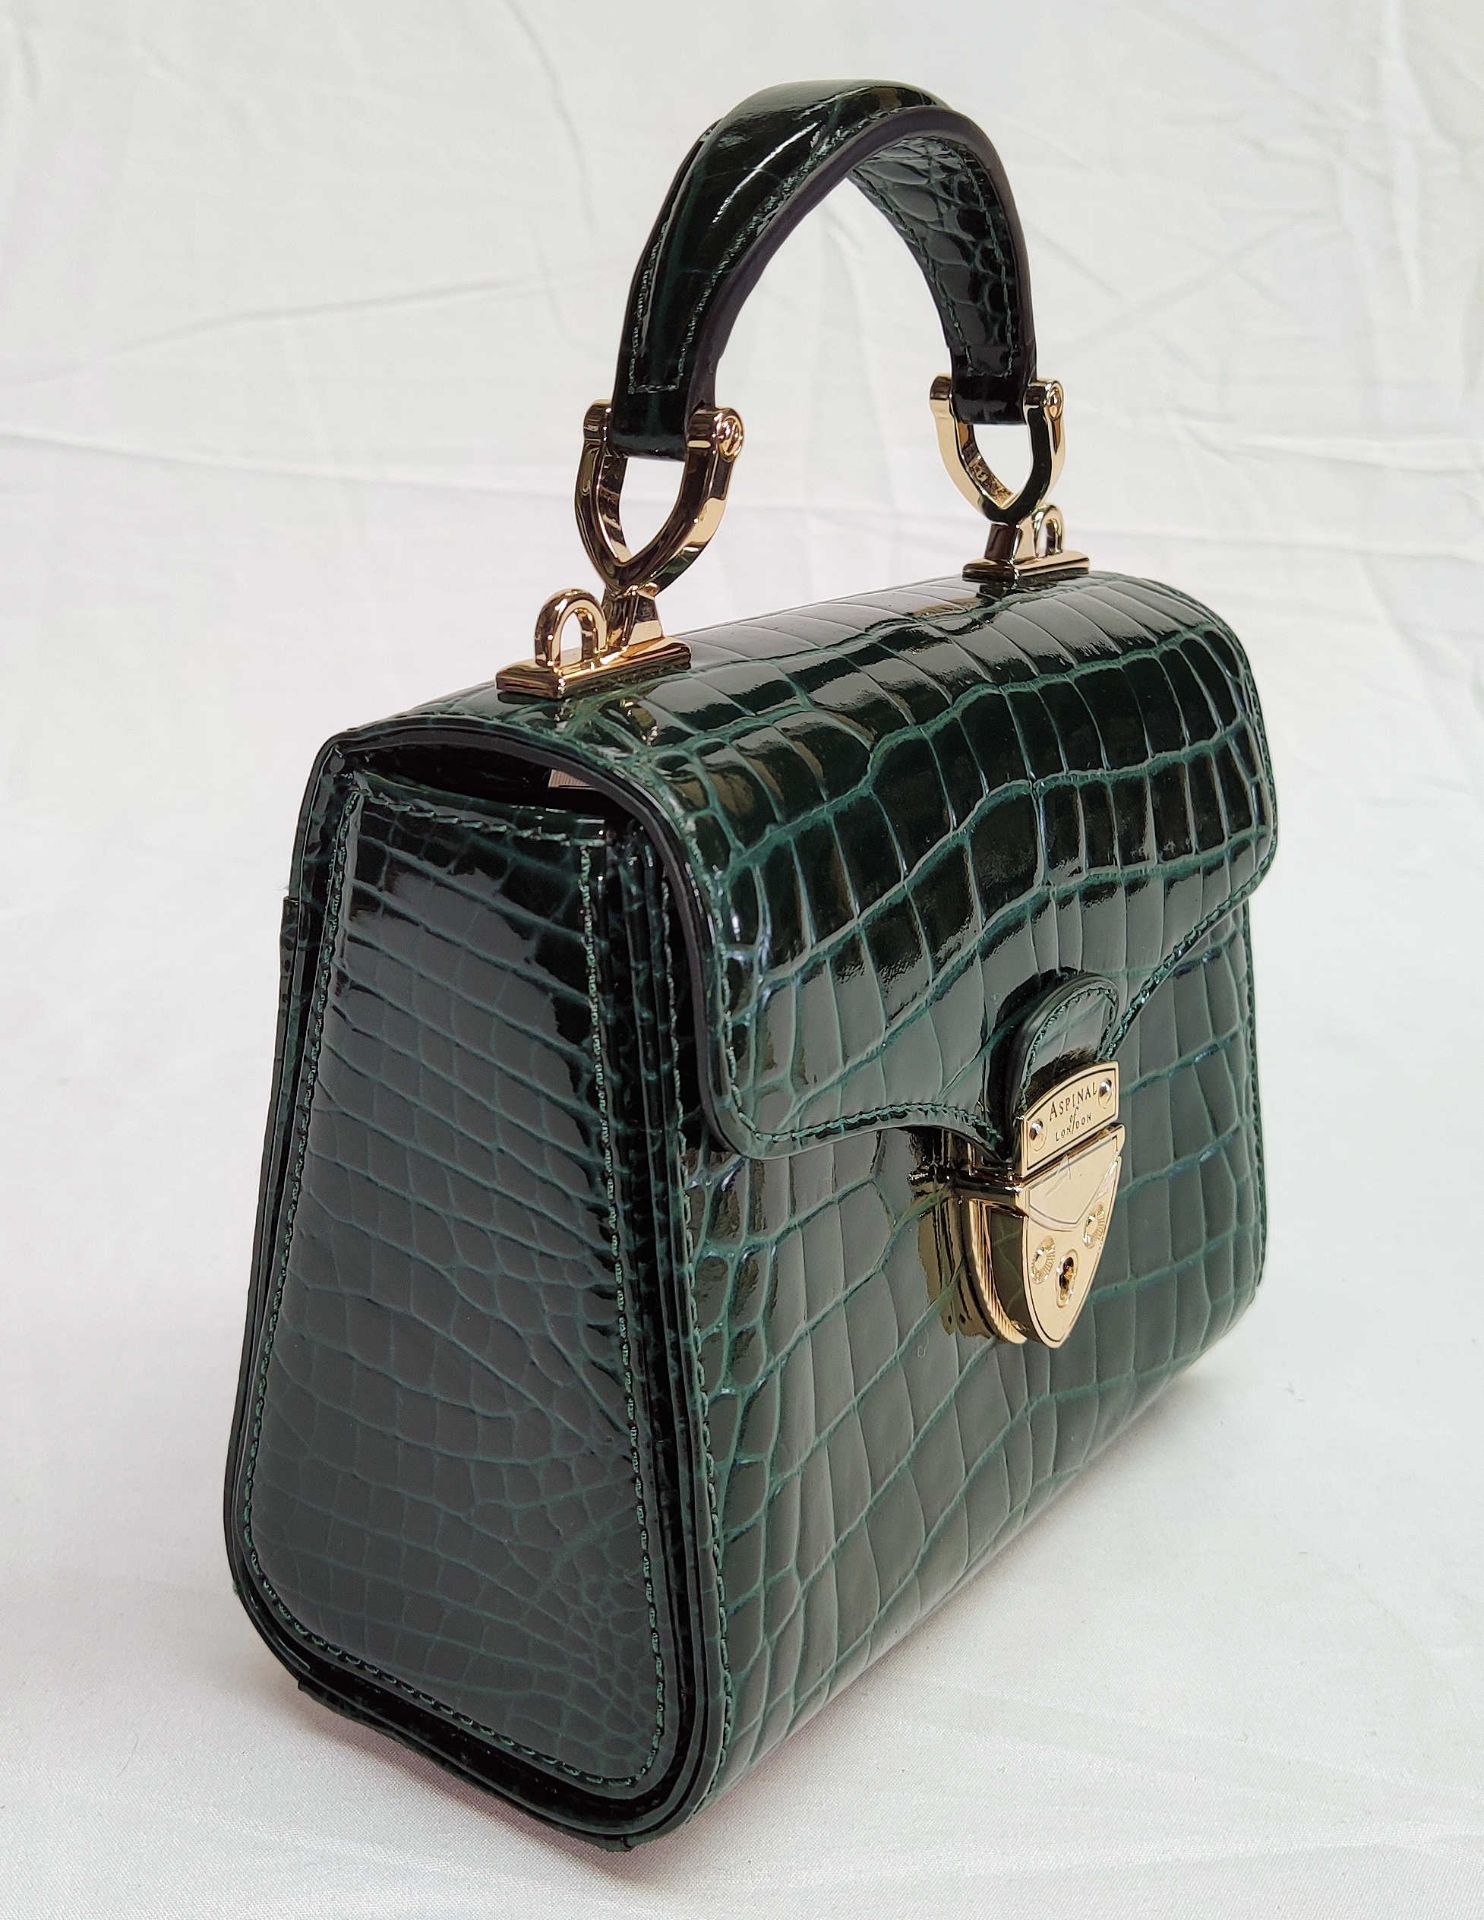 1 x ASPINAL OF LONDON Mayfair Mini Bag - Evergreen Patent Croc - Boxed - Original RRP £495 - Ref: - Image 4 of 21